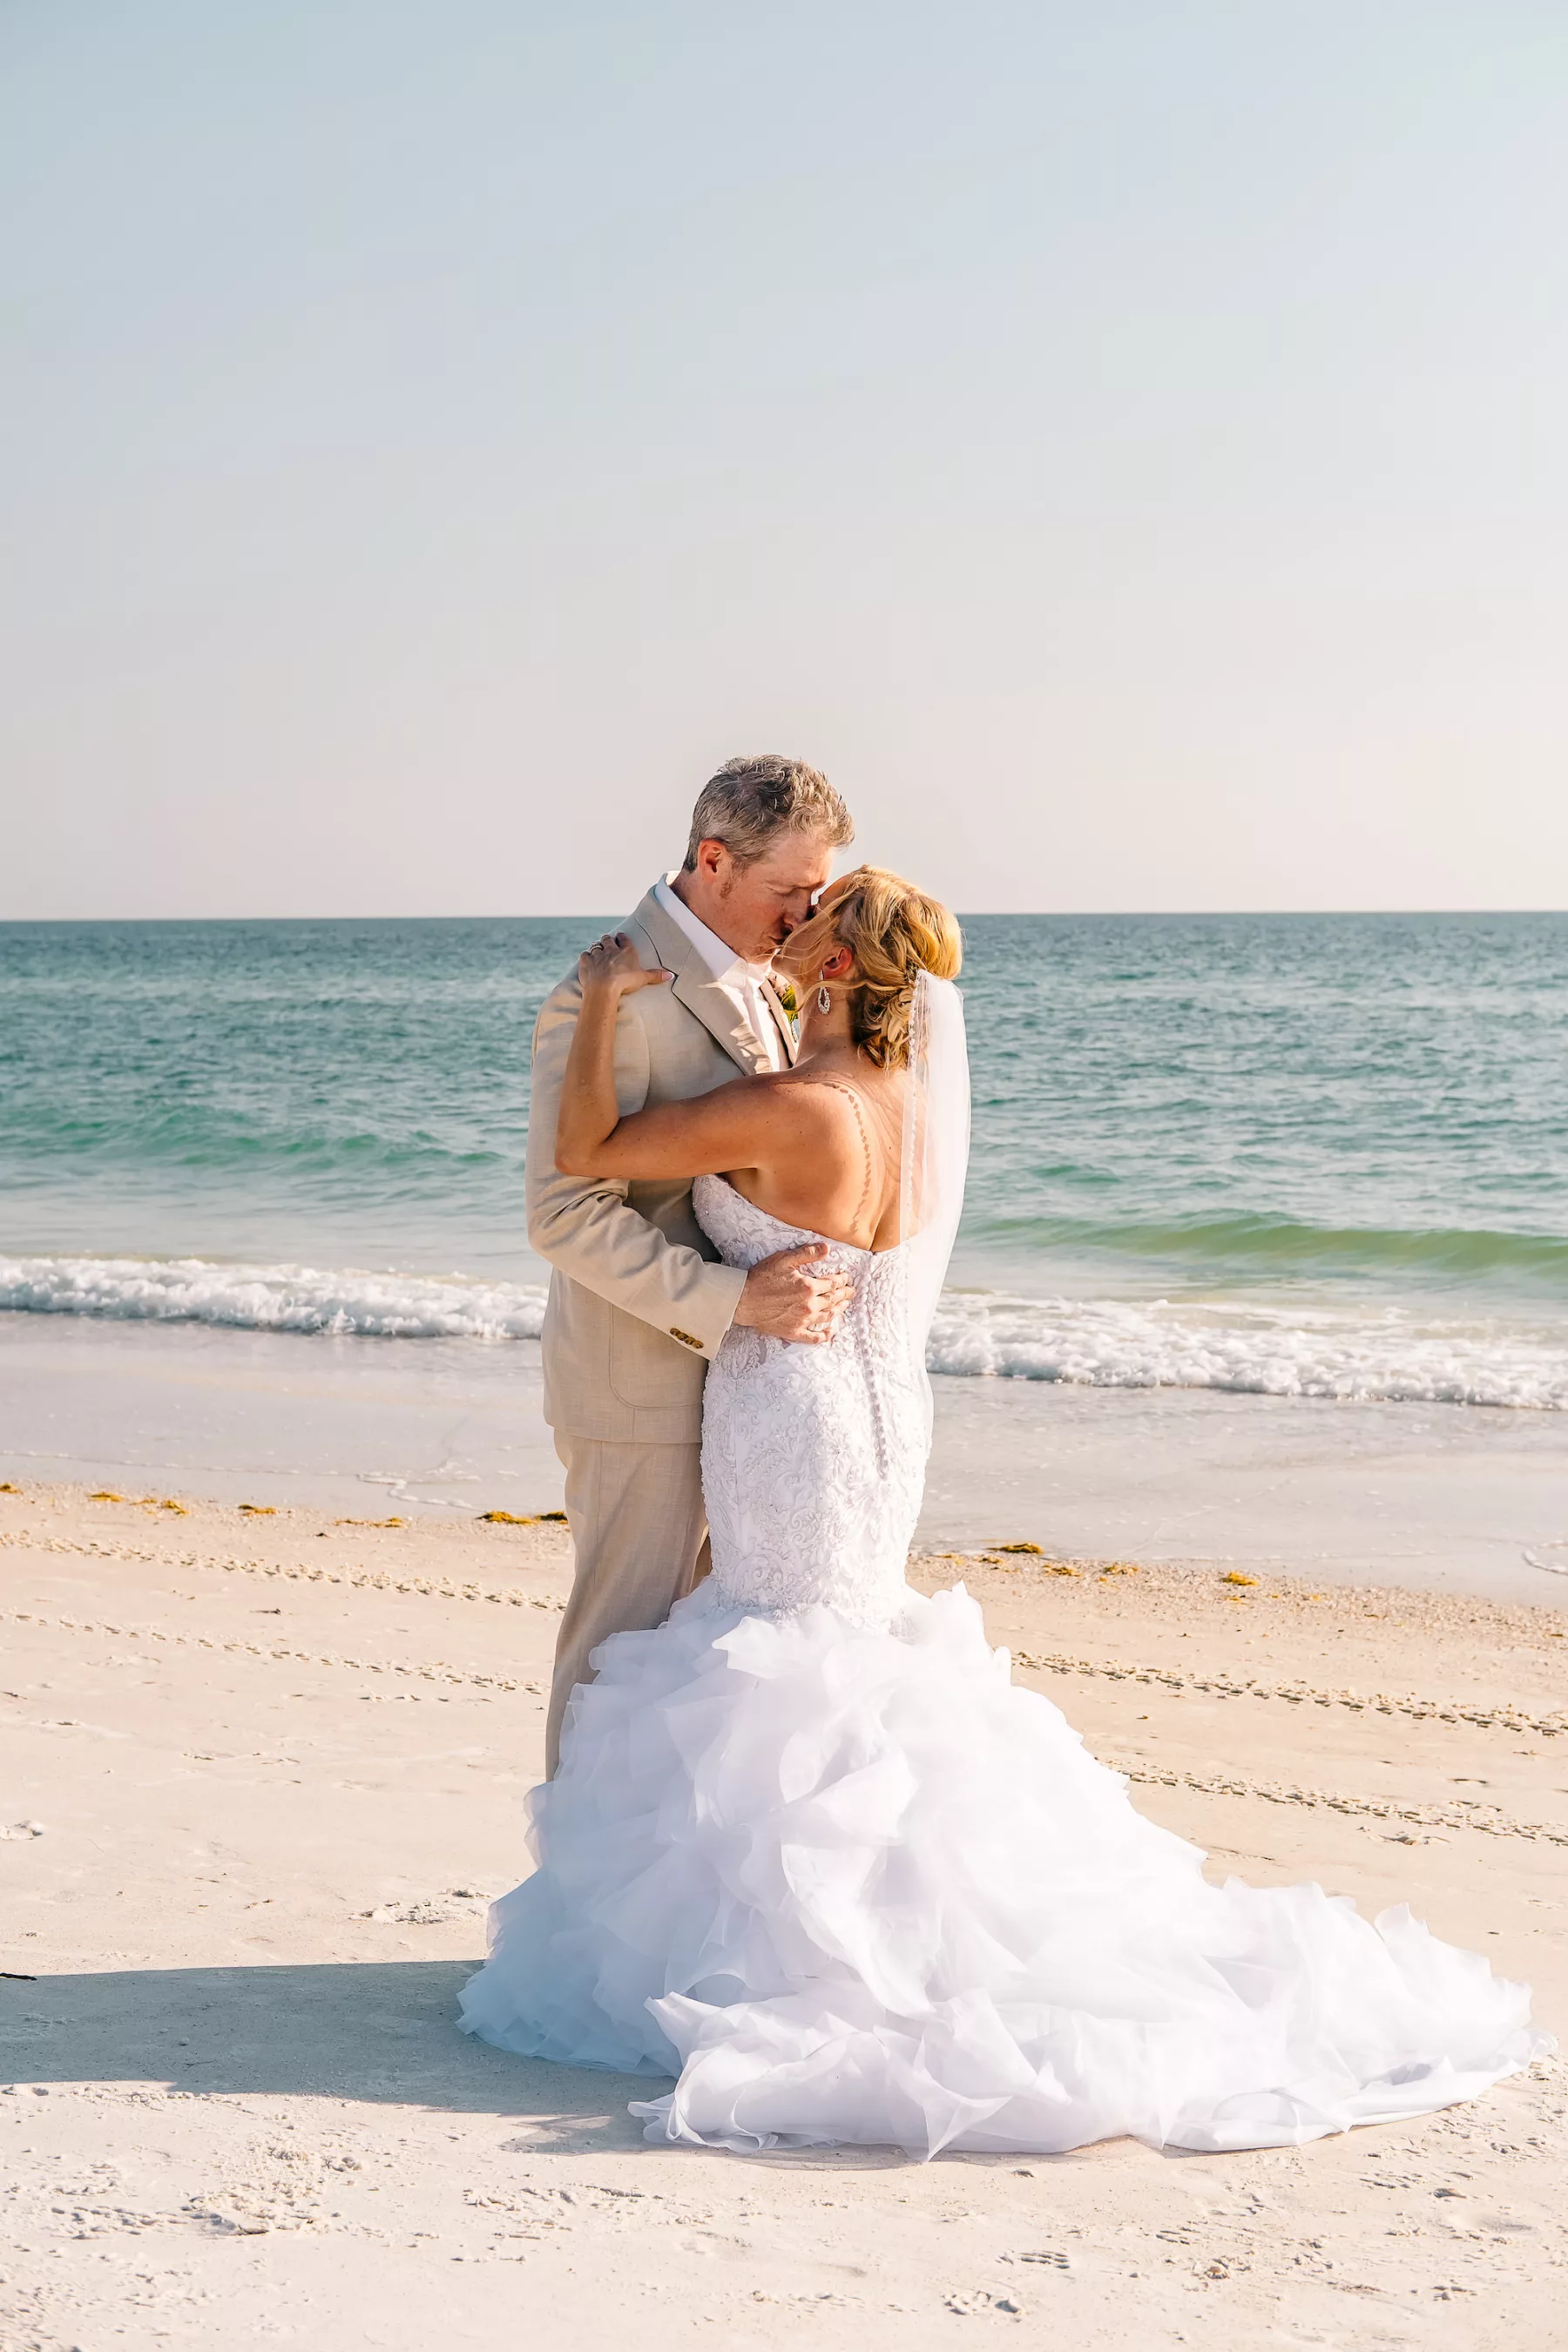 Bride and Groom Just Married Beach Wedding Portrait | Bride and Groom Just Married Wedding Portrait | Tampa Bay Destination Planner Gulf Beach Weddings